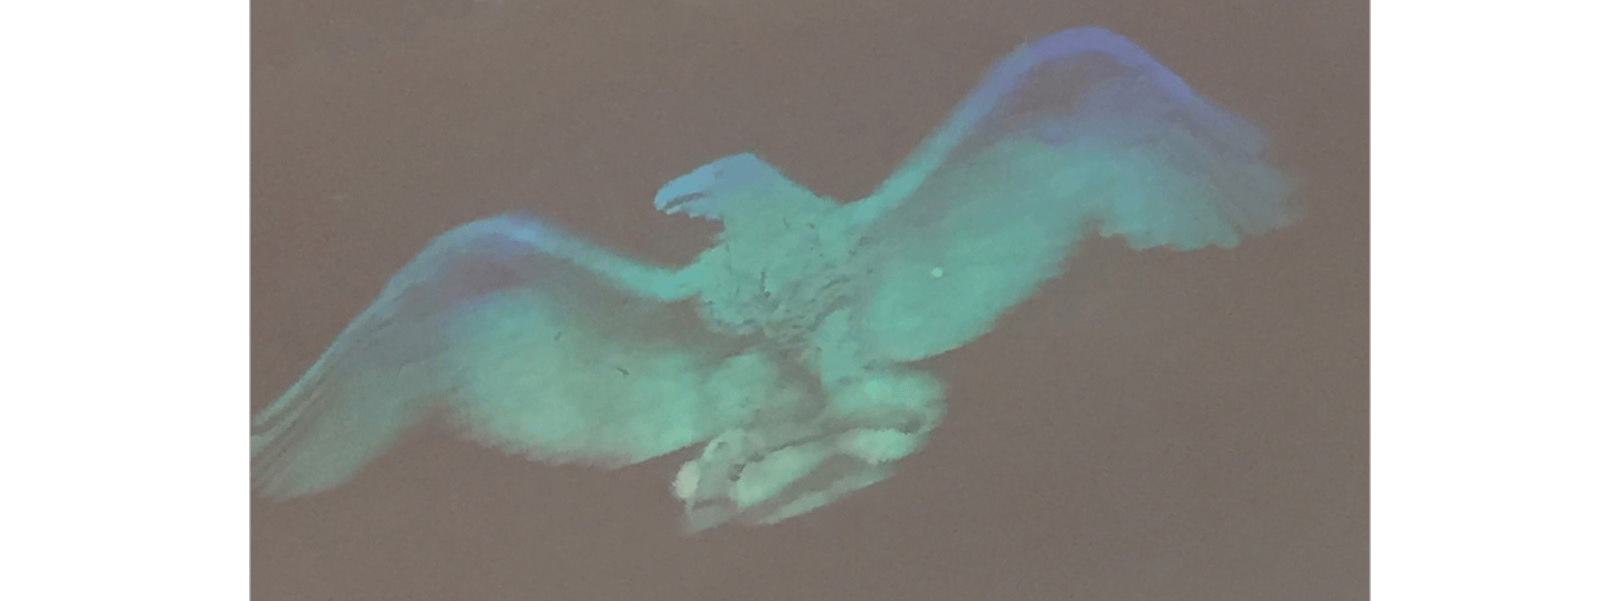 FLEXcon holographic eagle